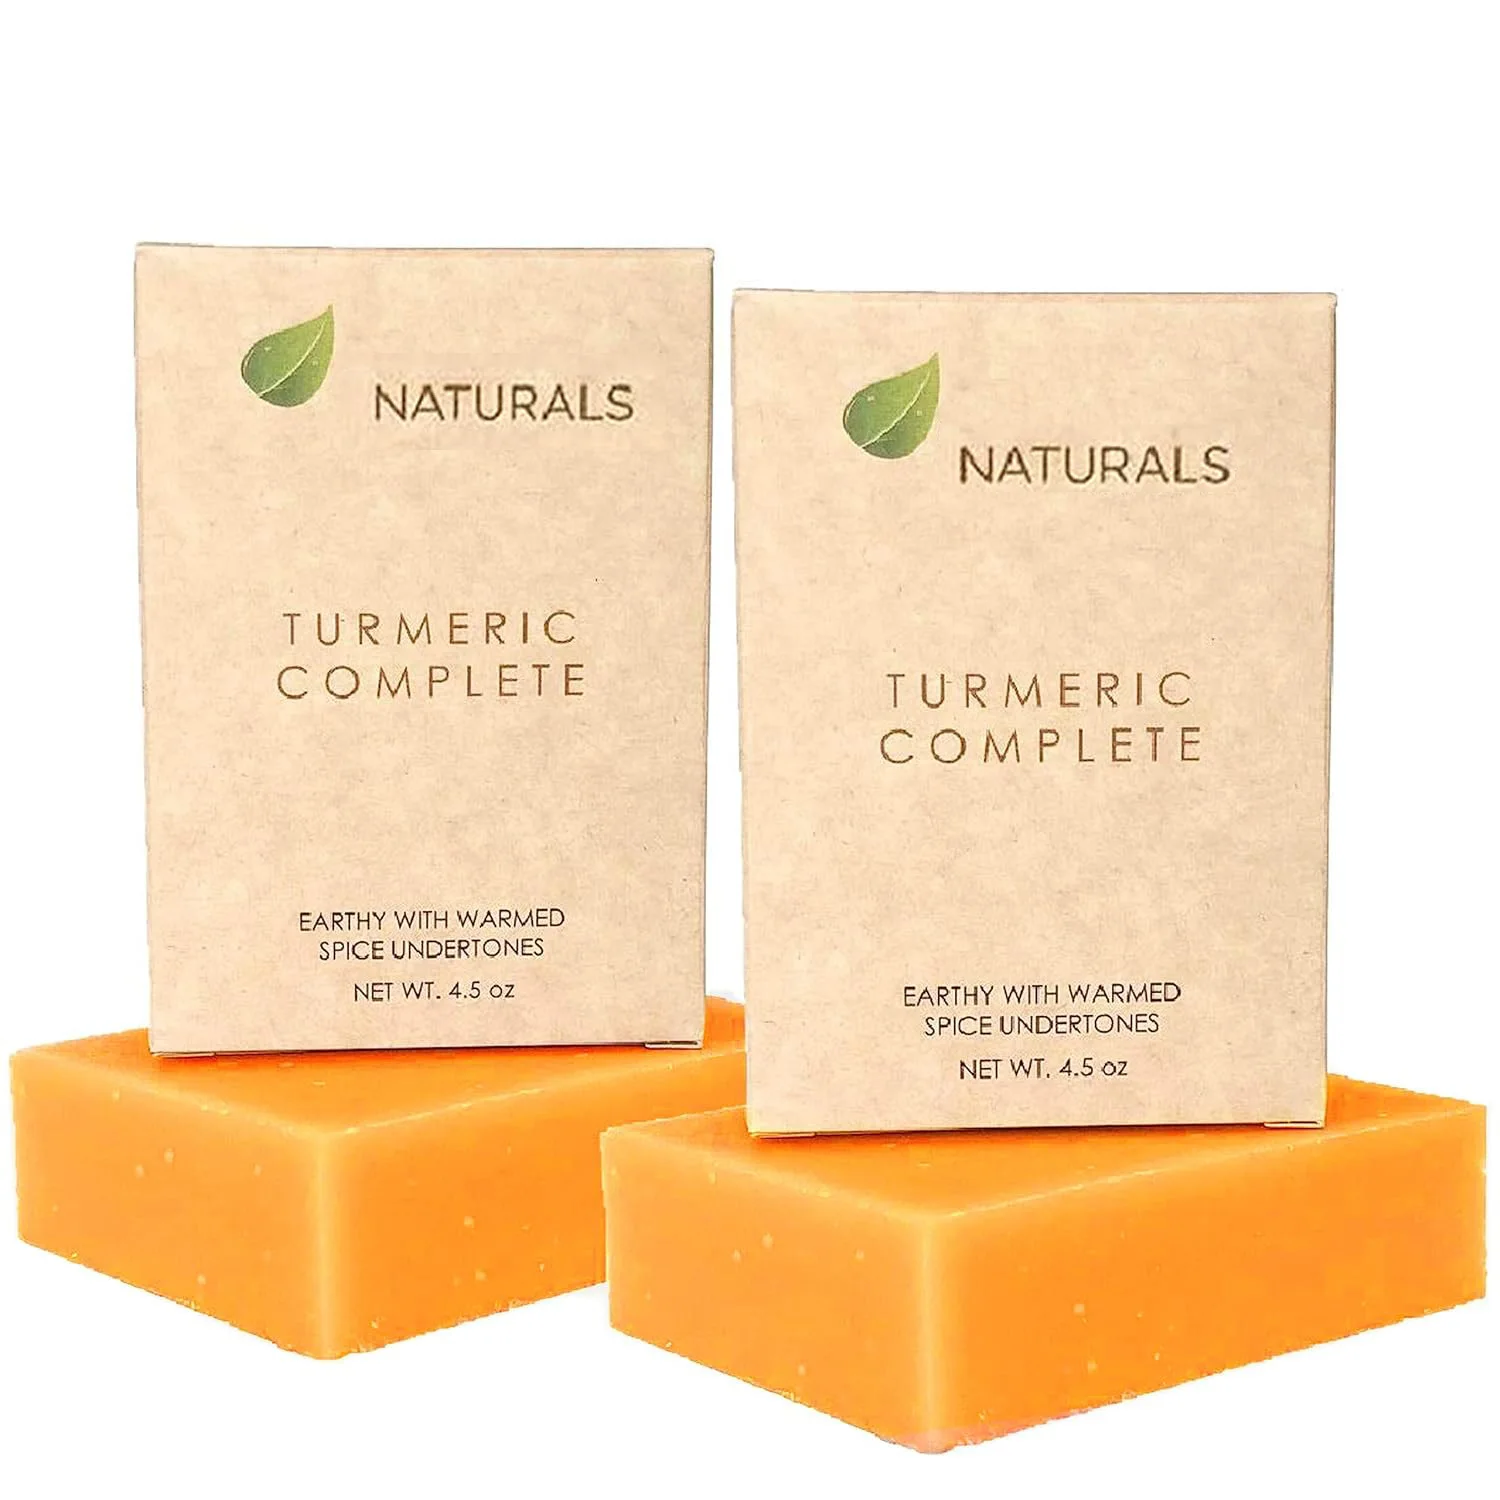 Hot selling skin whitening soap kojic acid organic natural kojic acid soap turmeric skin whitening kojic acid soap 100g